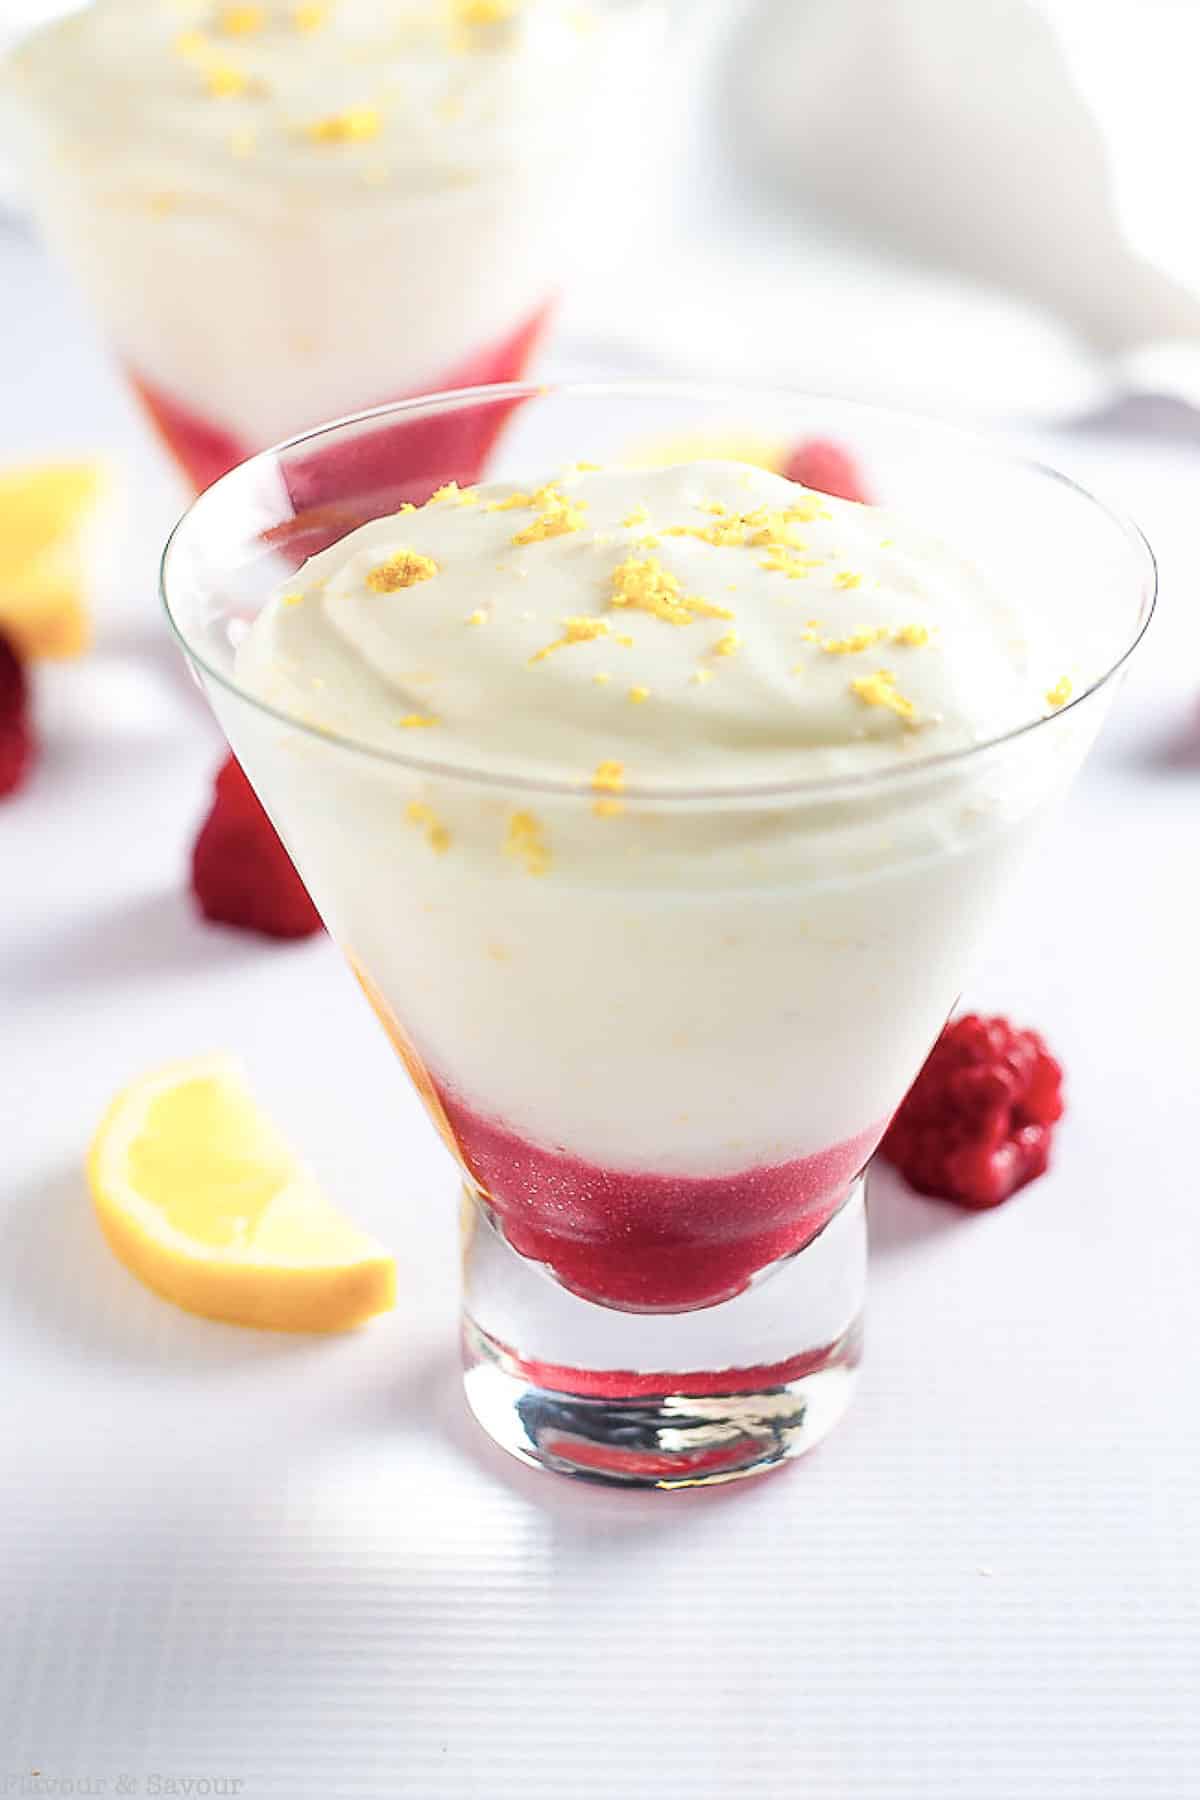 Dessert glasses with light lemon mousse made with Greek yogurt.